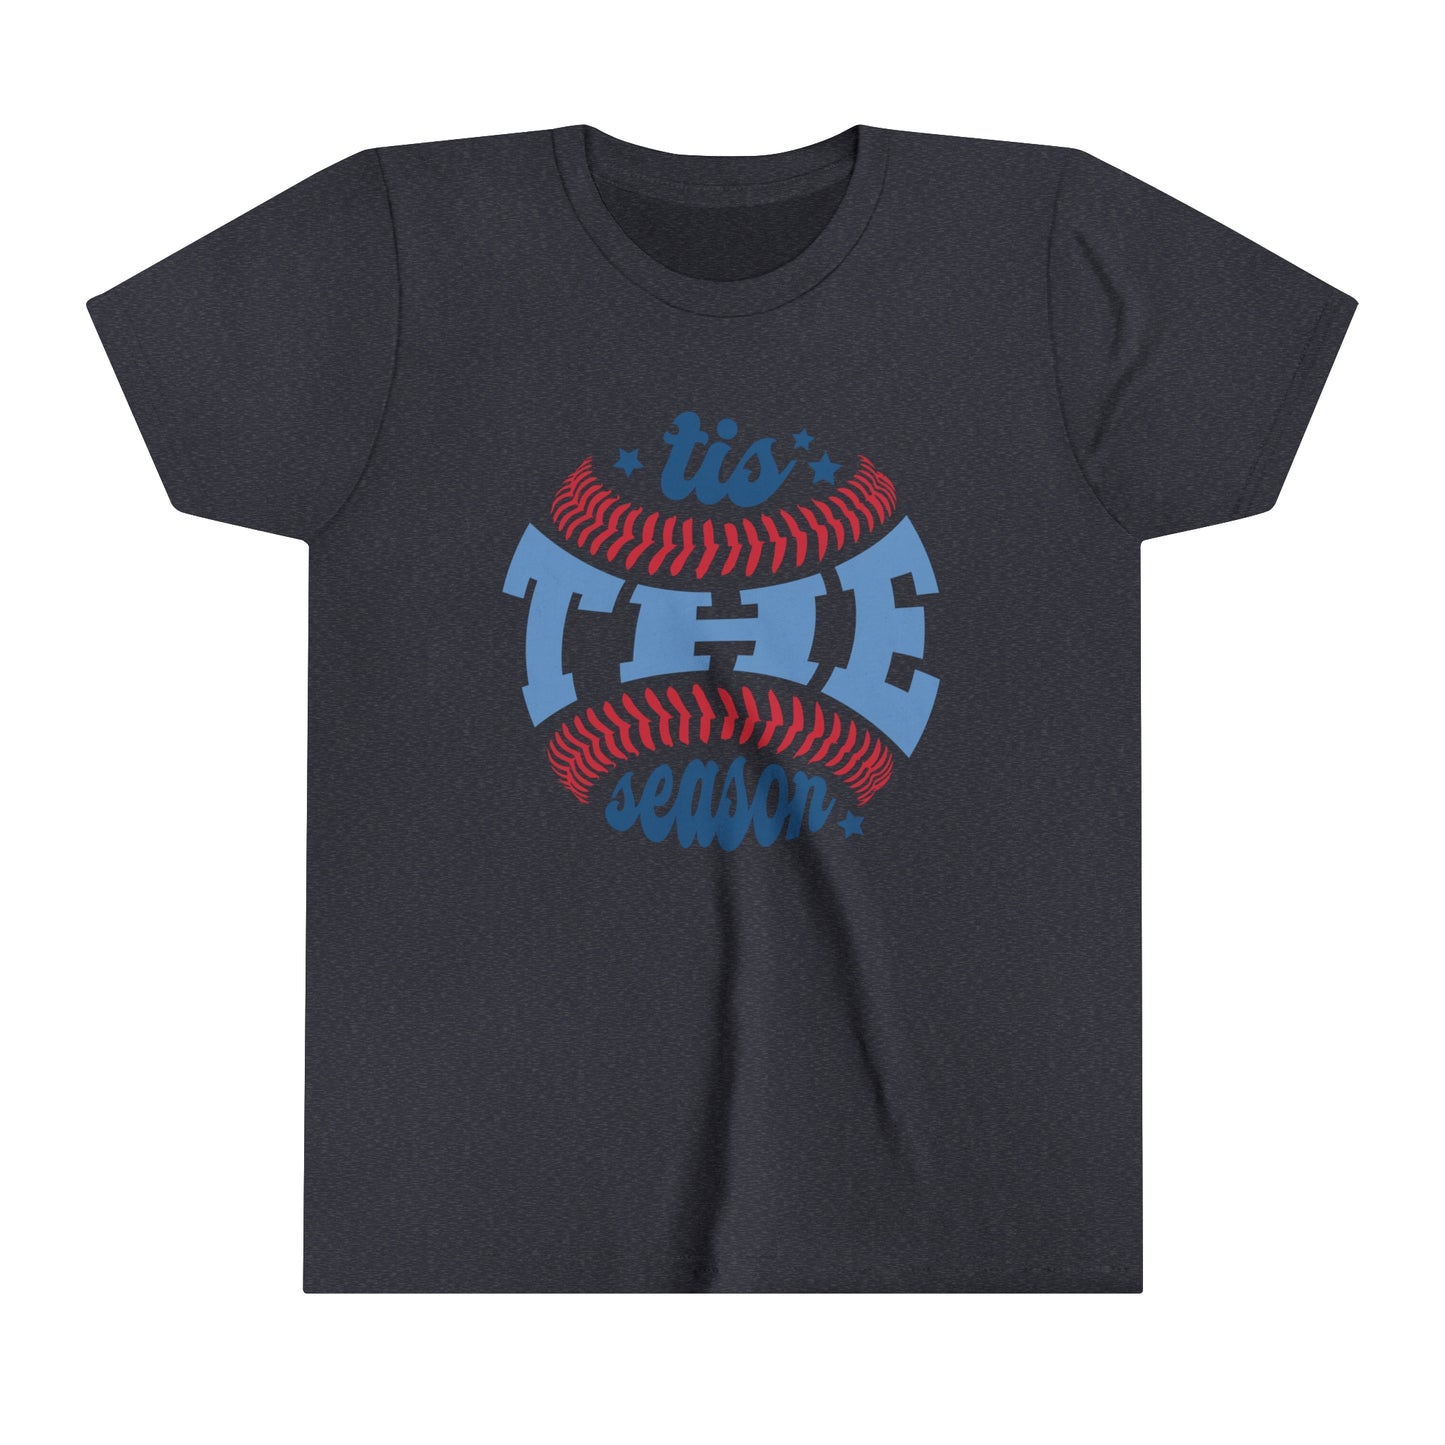 Tis the Season Baseball Unisex Youth Shirt